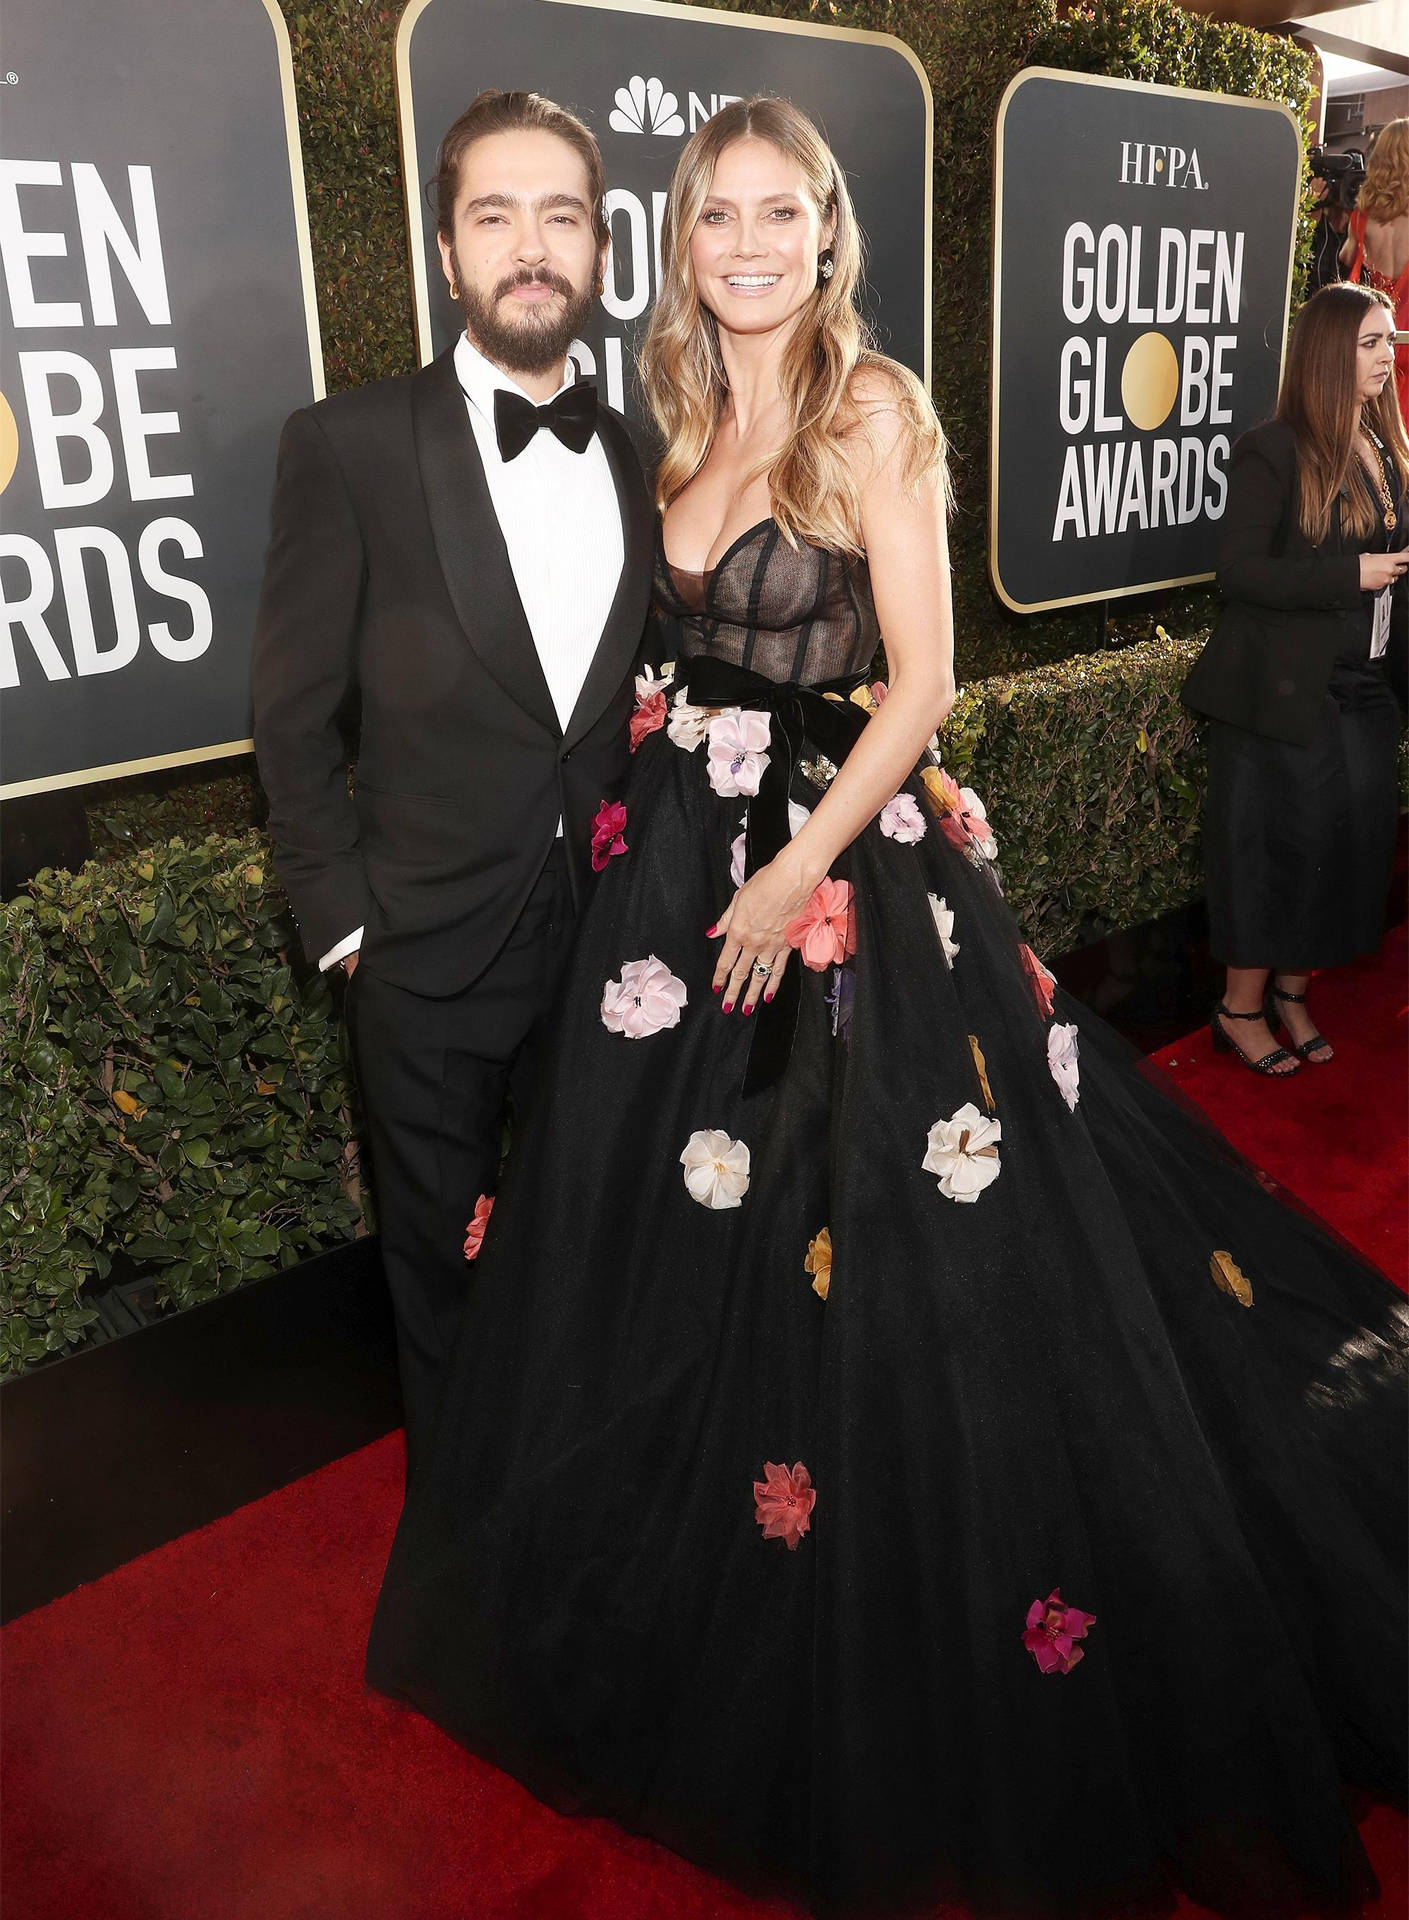 Heidi Klum On Golden Globe Awards Background